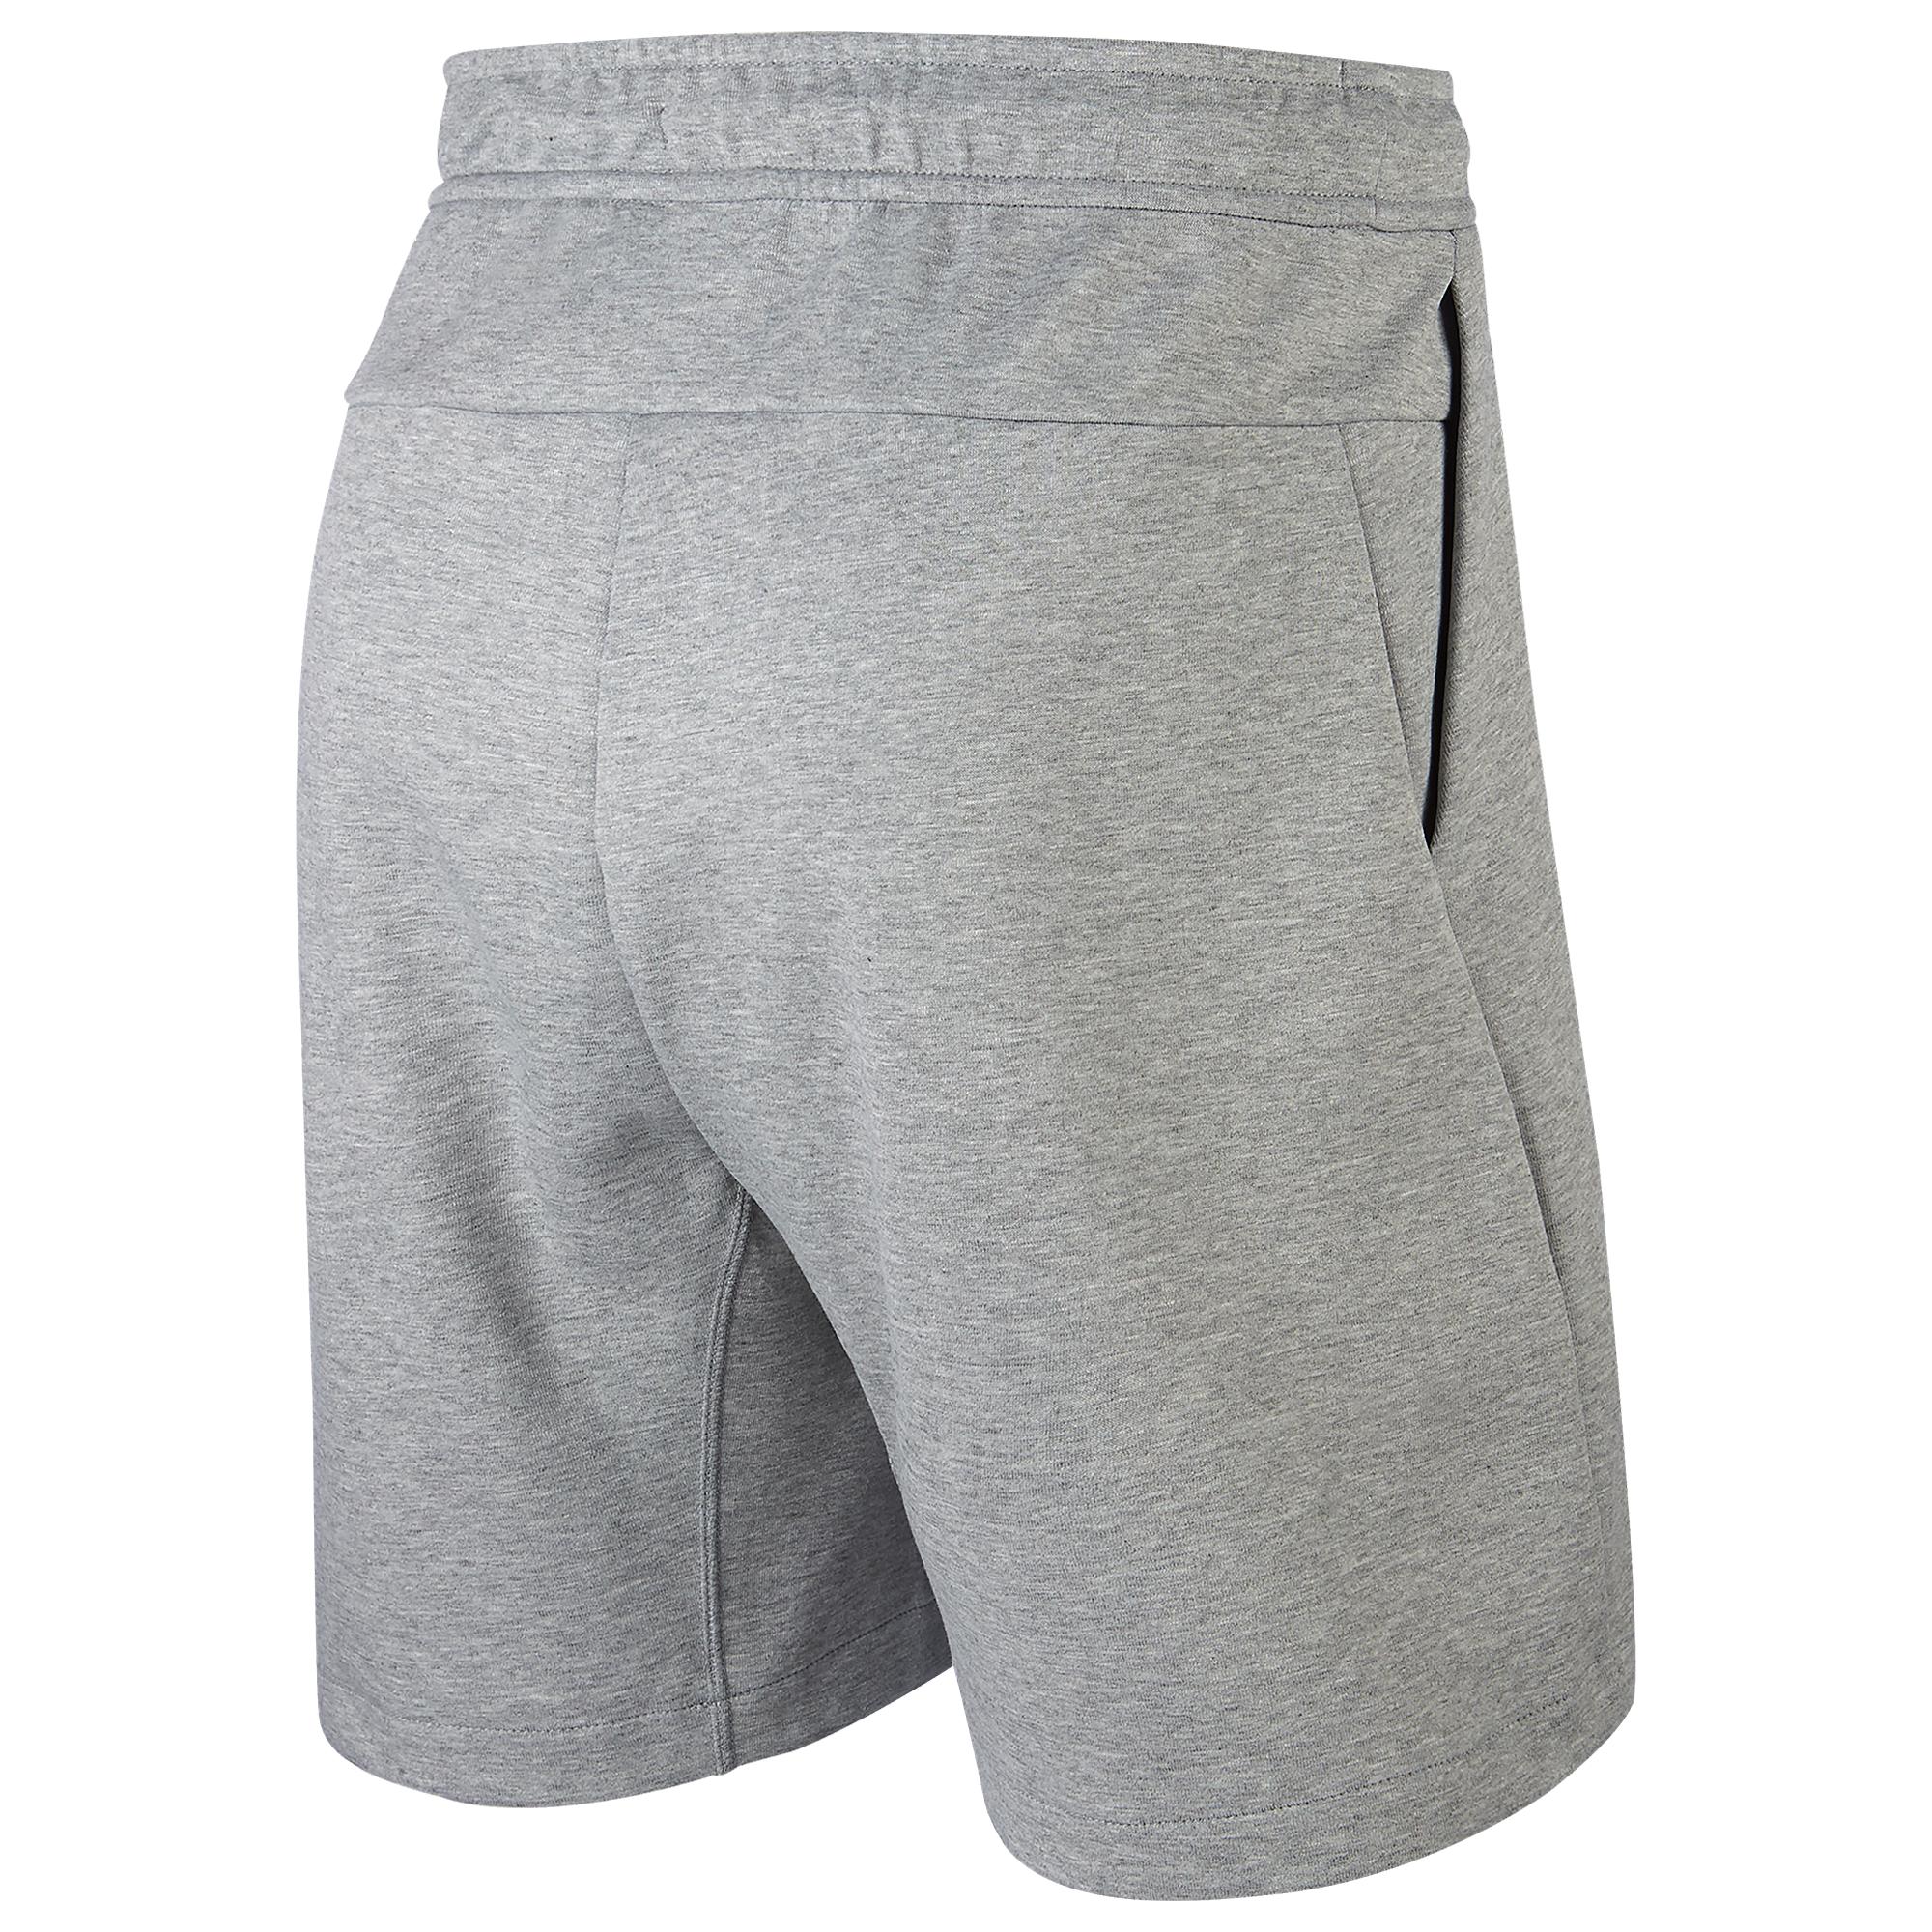 Nike Nsw Tech Fleece Shorts in Gray for Men - Save 15% - Lyst